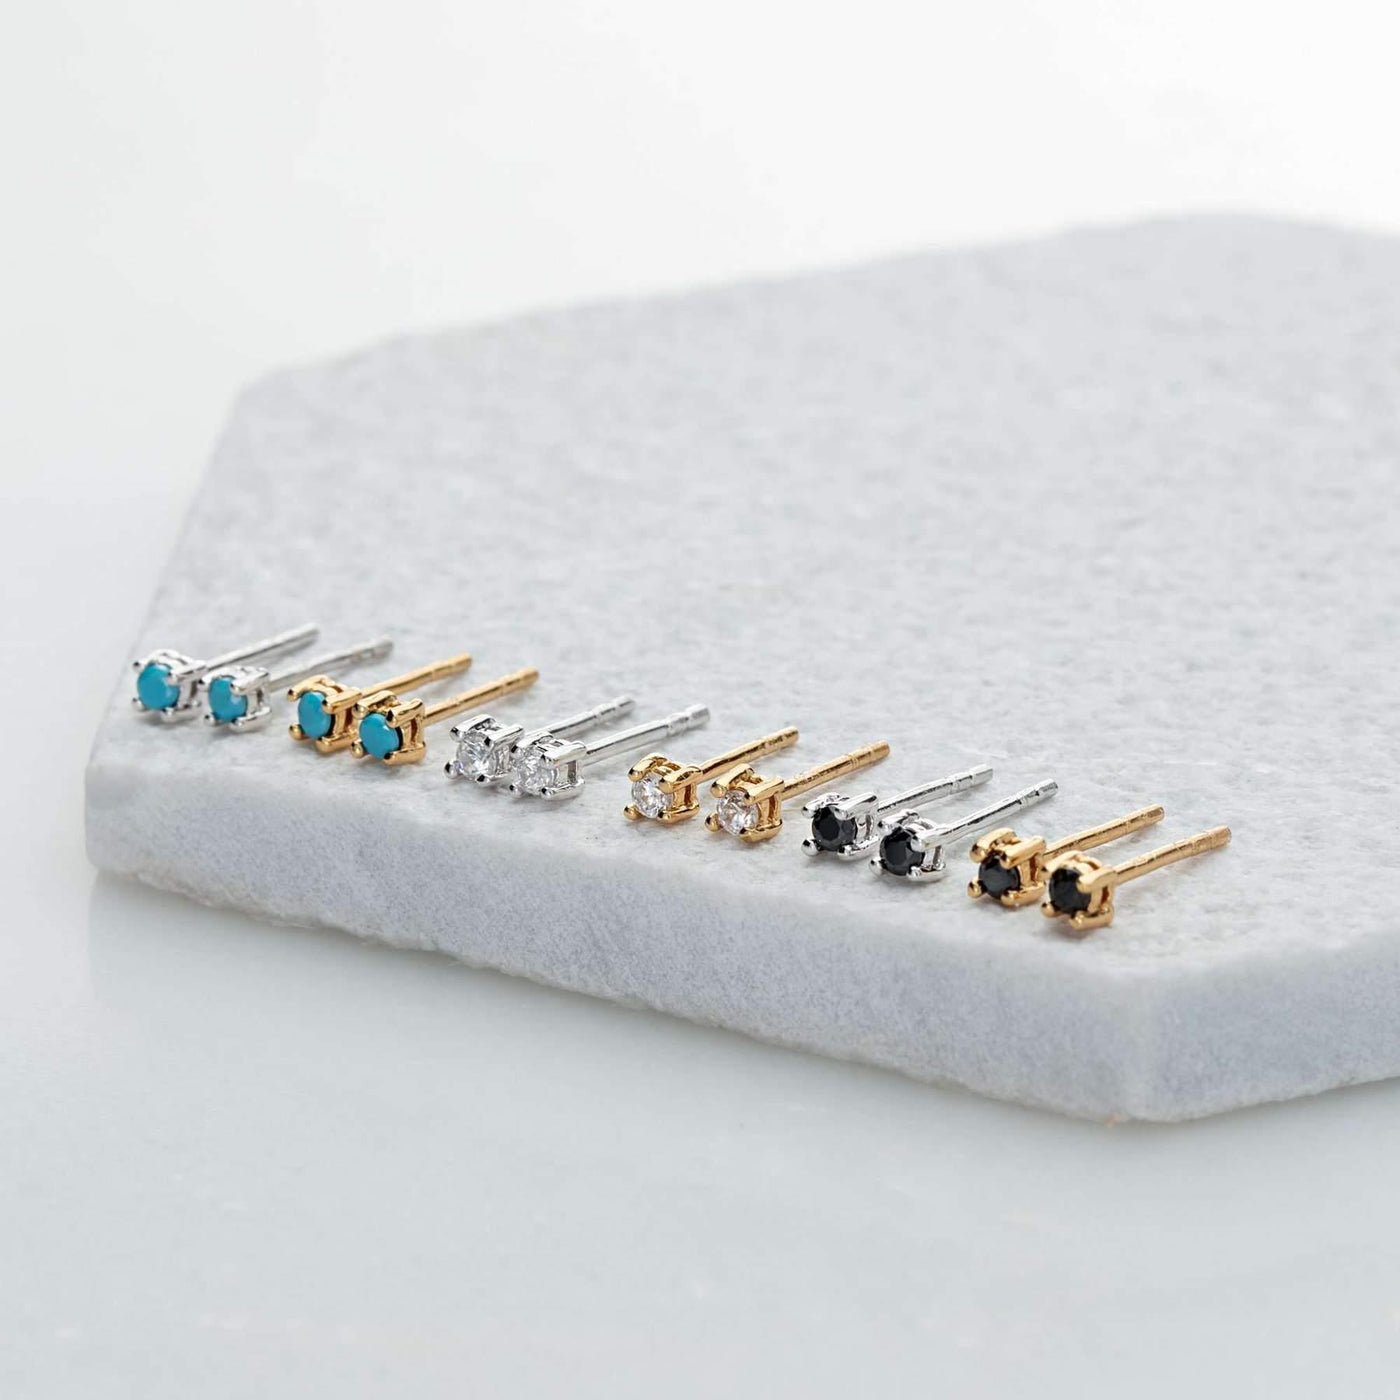 Scream Pretty Teeny Tiny Stud Earrings - With Black Stones - Rococo Jewellery